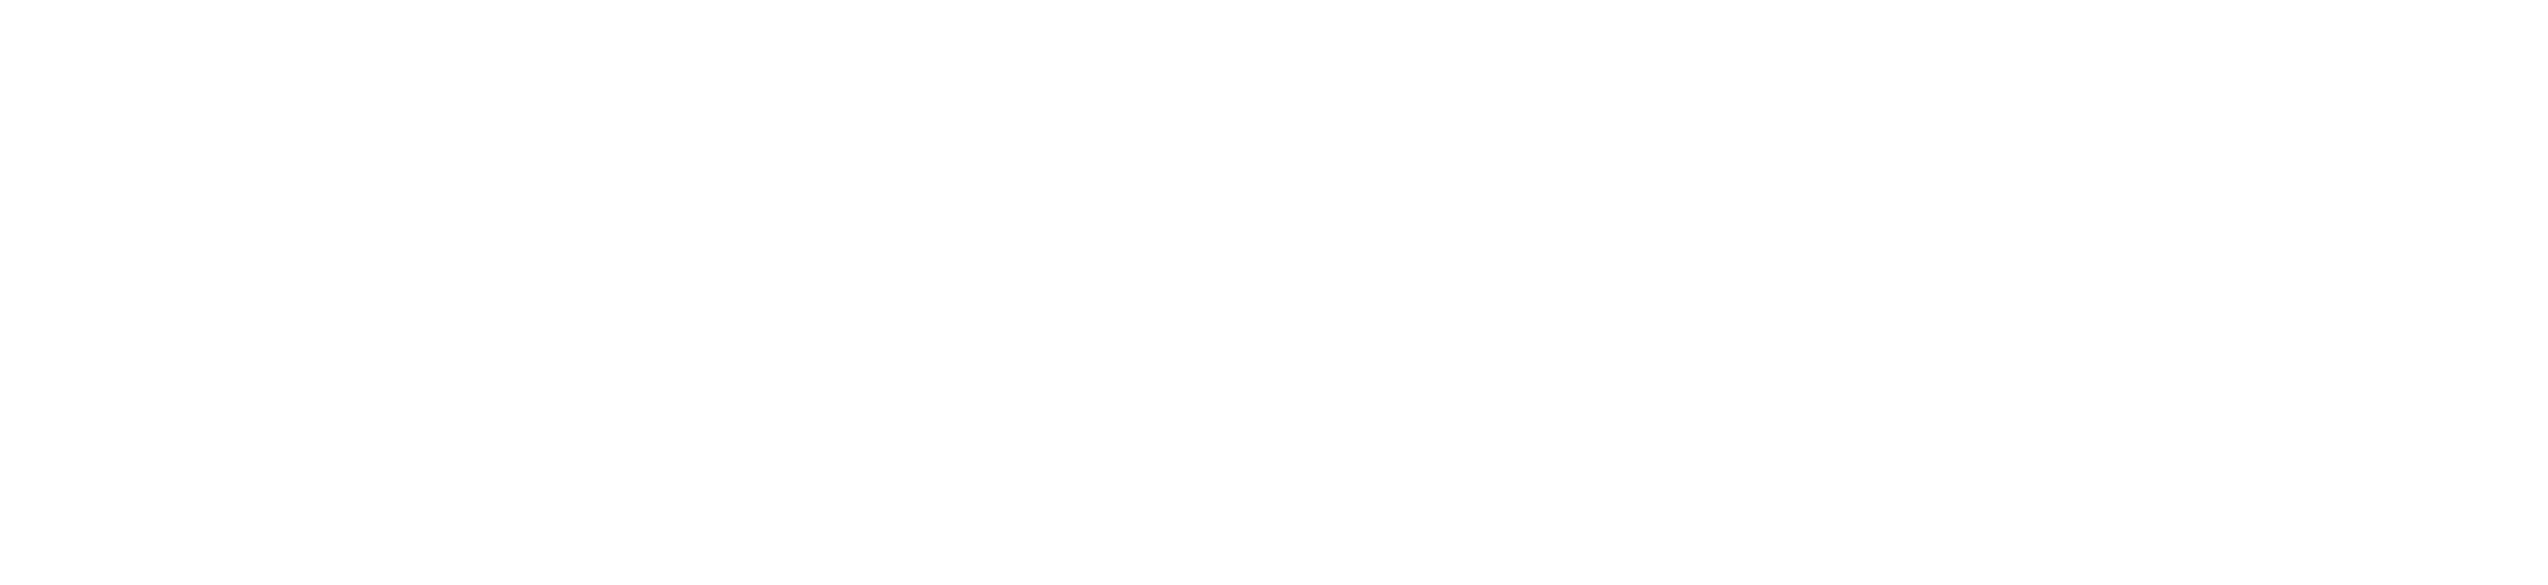 A. B. Freeman School of Business logo